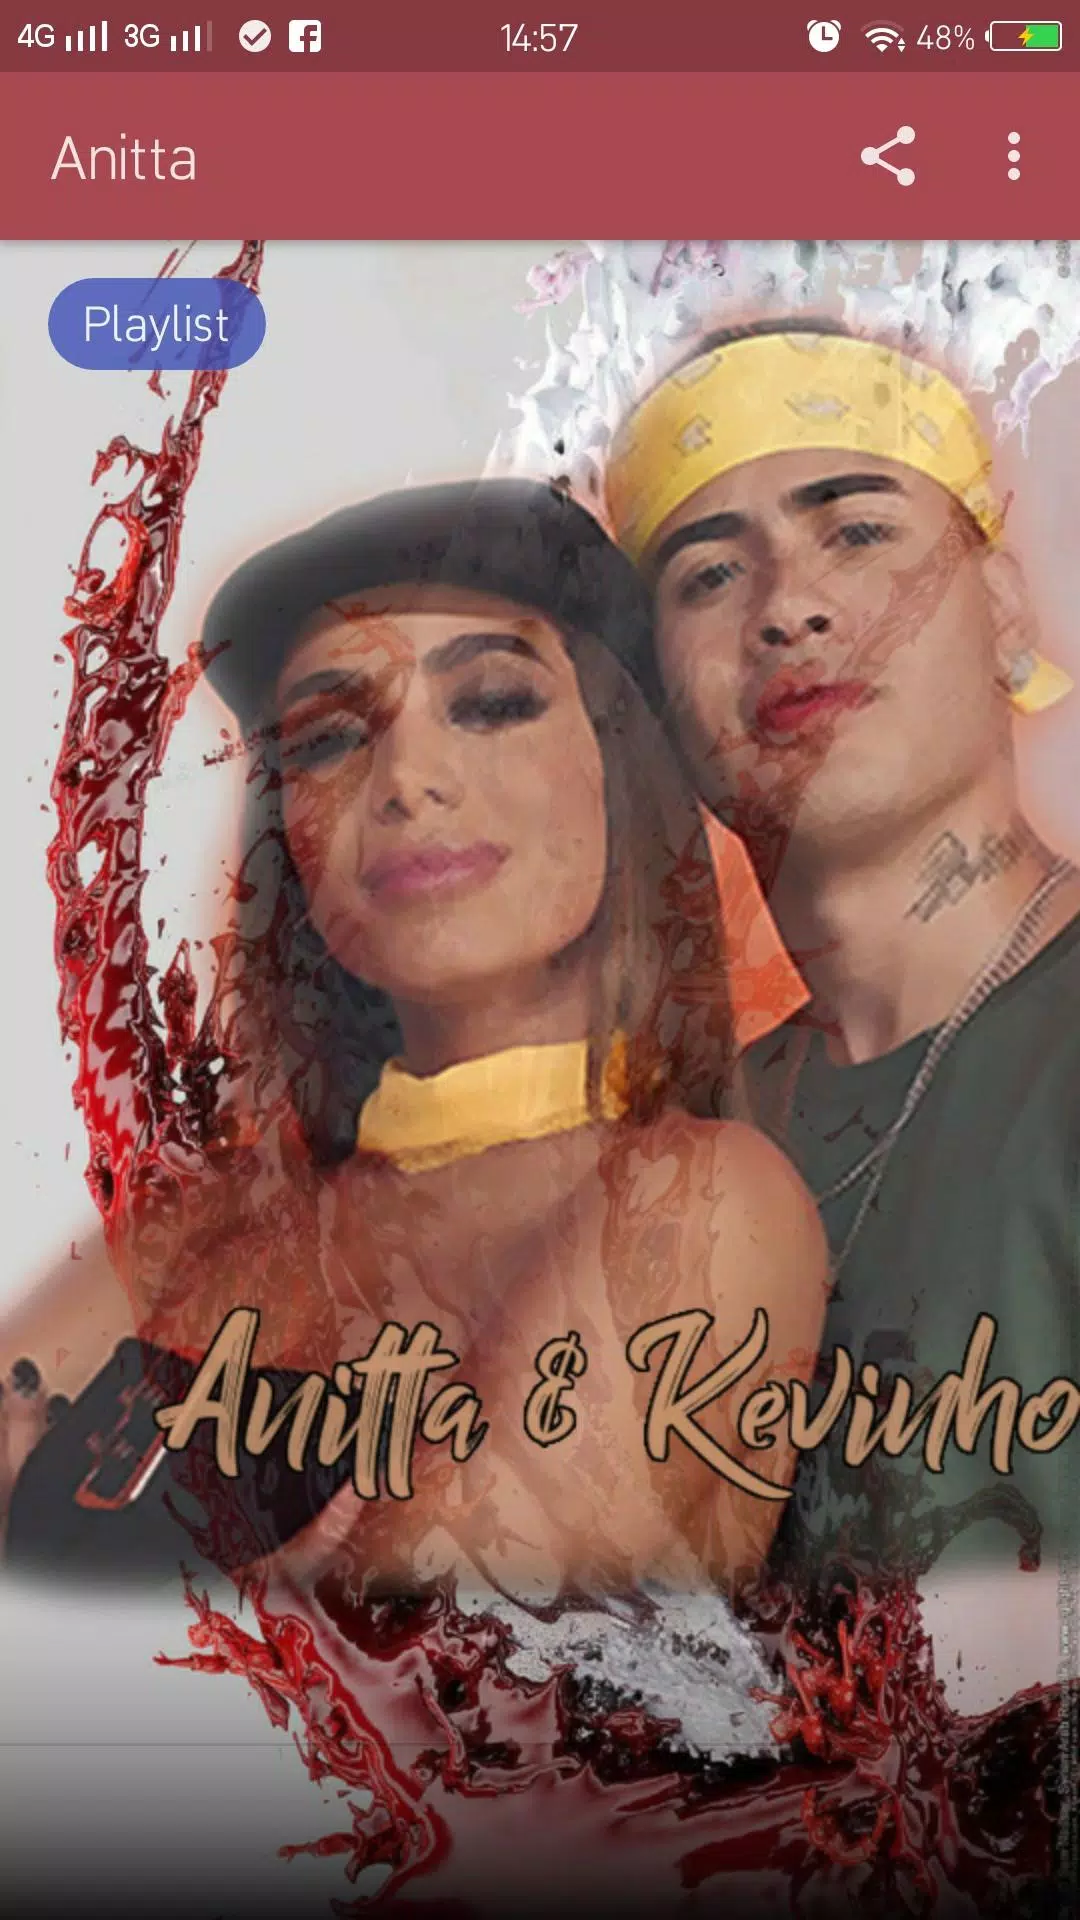 Sofia Reyes, Rita Ora, Anitta - R.I.P. for Android - APK Download